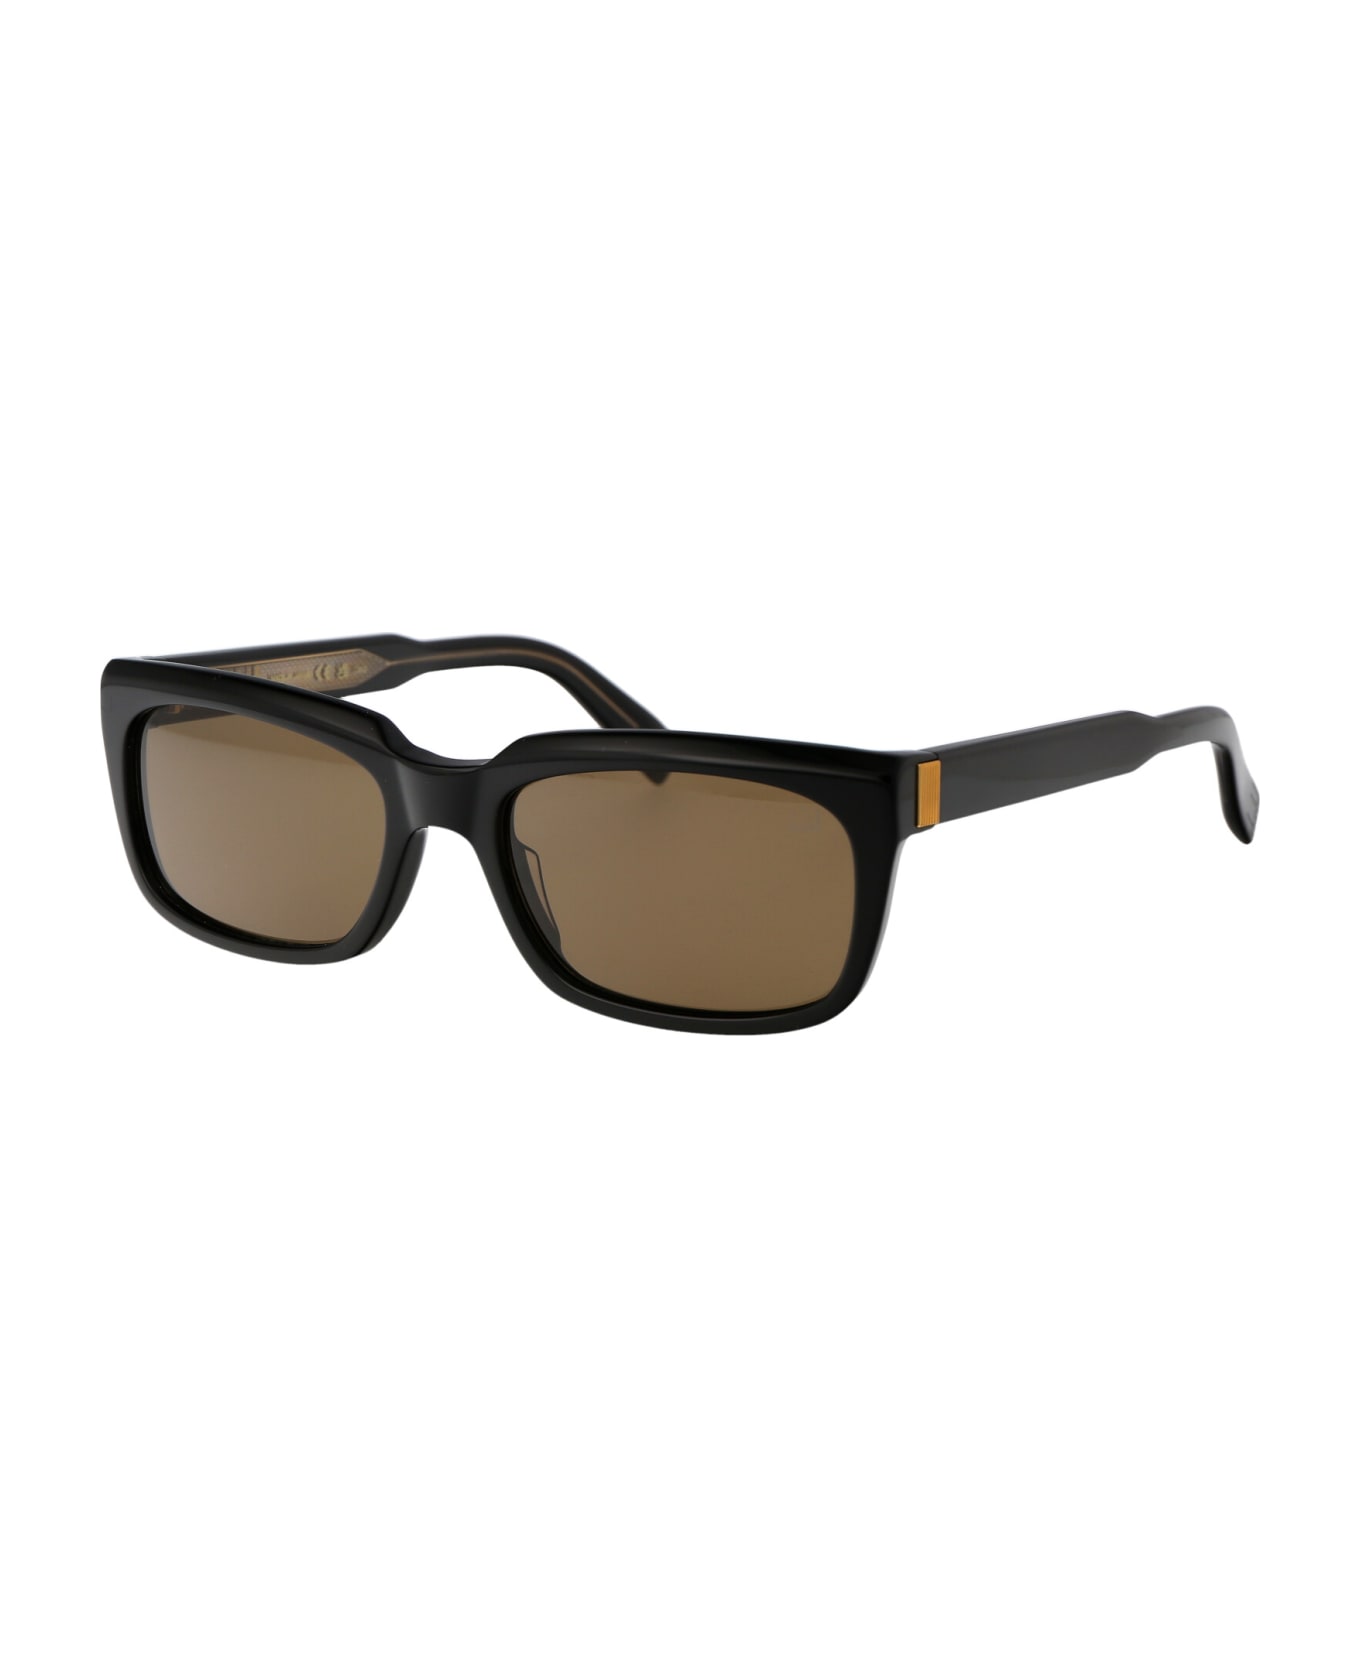 Dunhill Du0056s Sunglasses - 001 BLACK BLACK BROWN